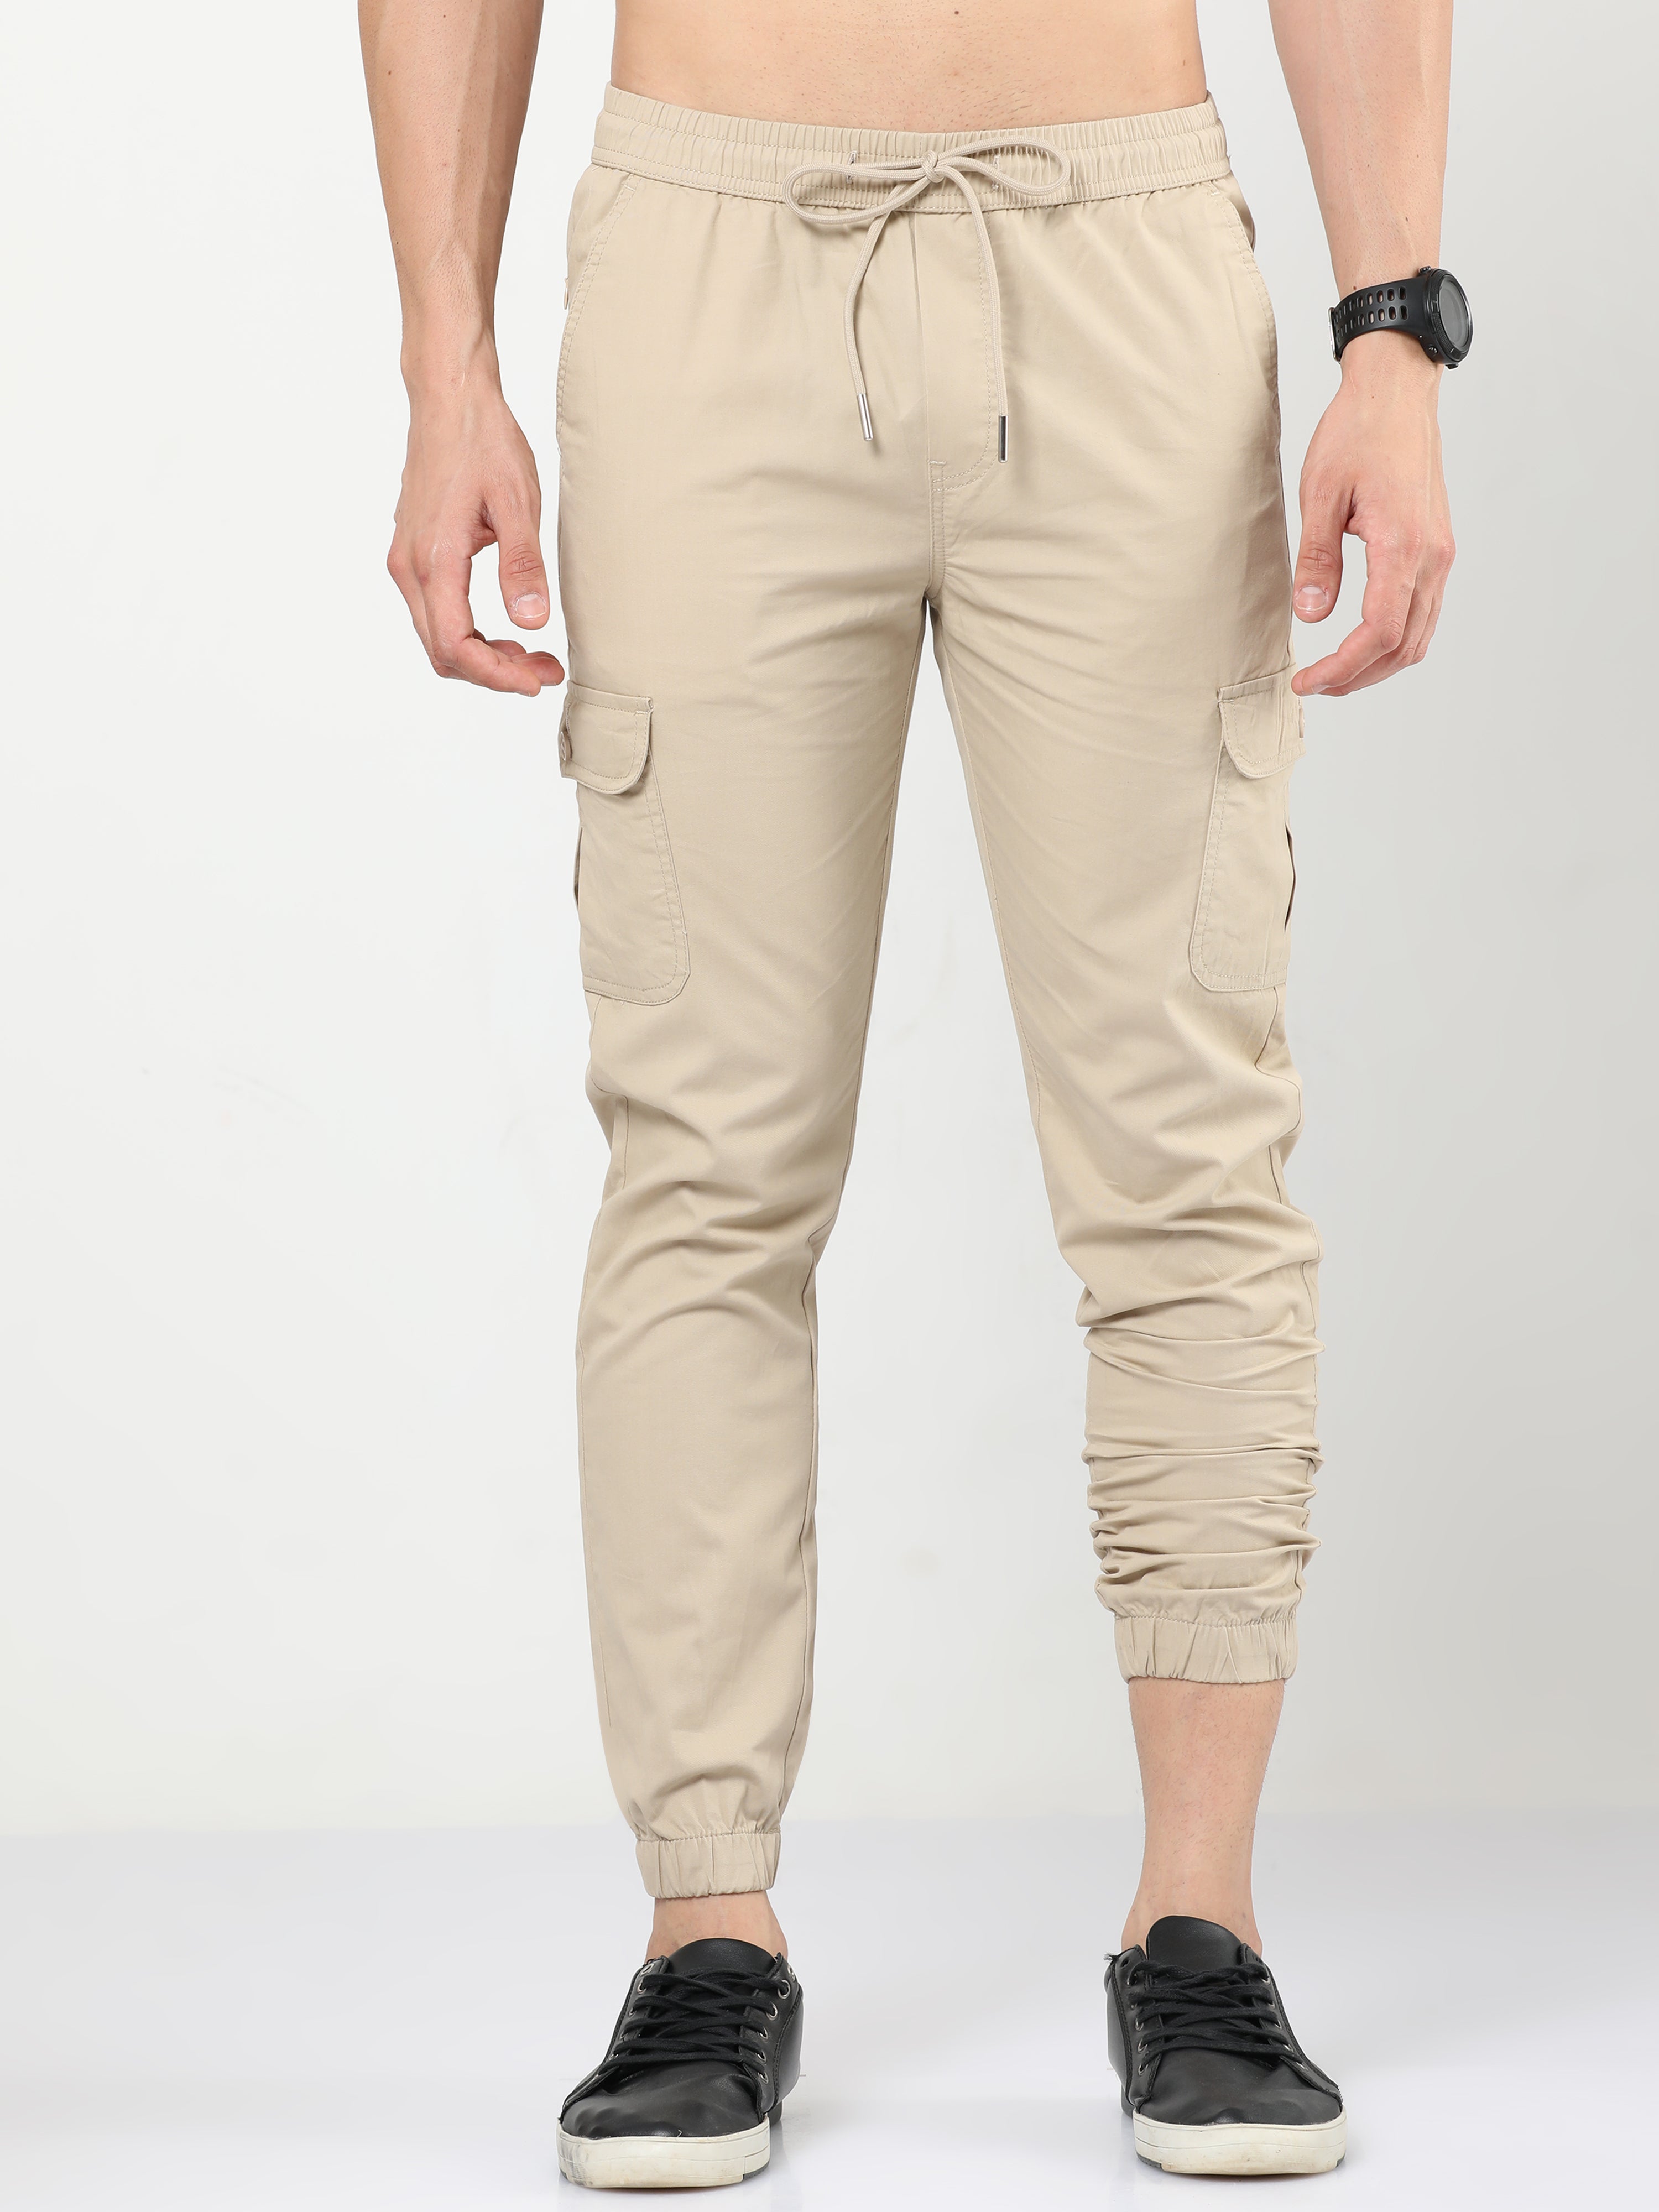 Bergati Men's Dress Pants Peach Pleated Front Cuffed Hem Size 36 x 28.5  Inseam | eBay